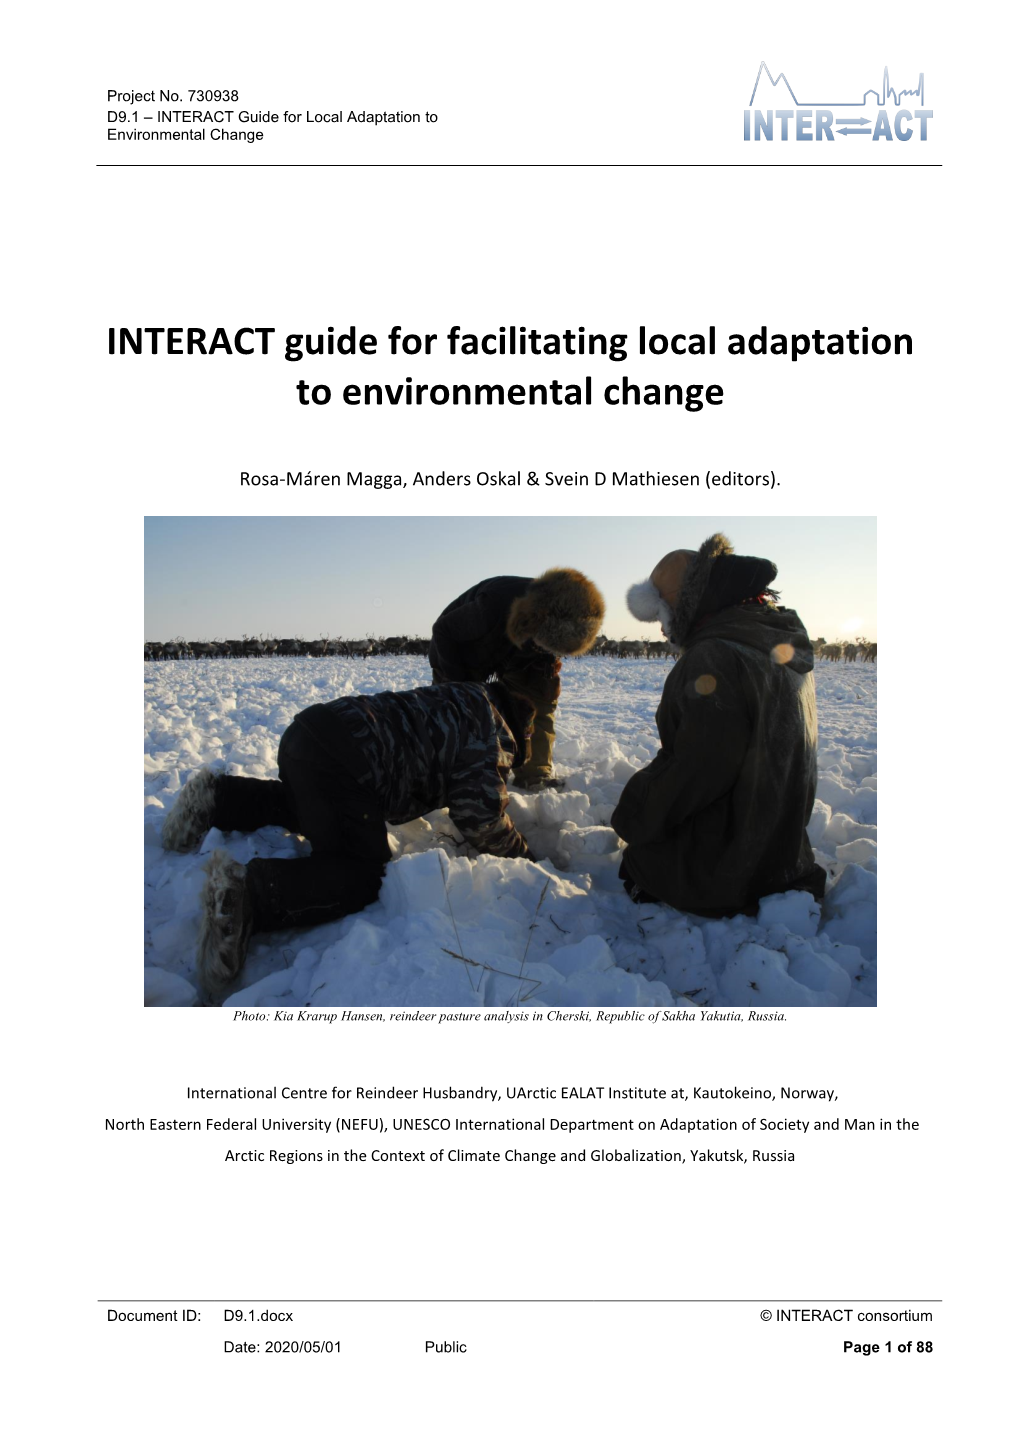 INTERACT Guide for Facilitating Local Adaptation to Environmental Change